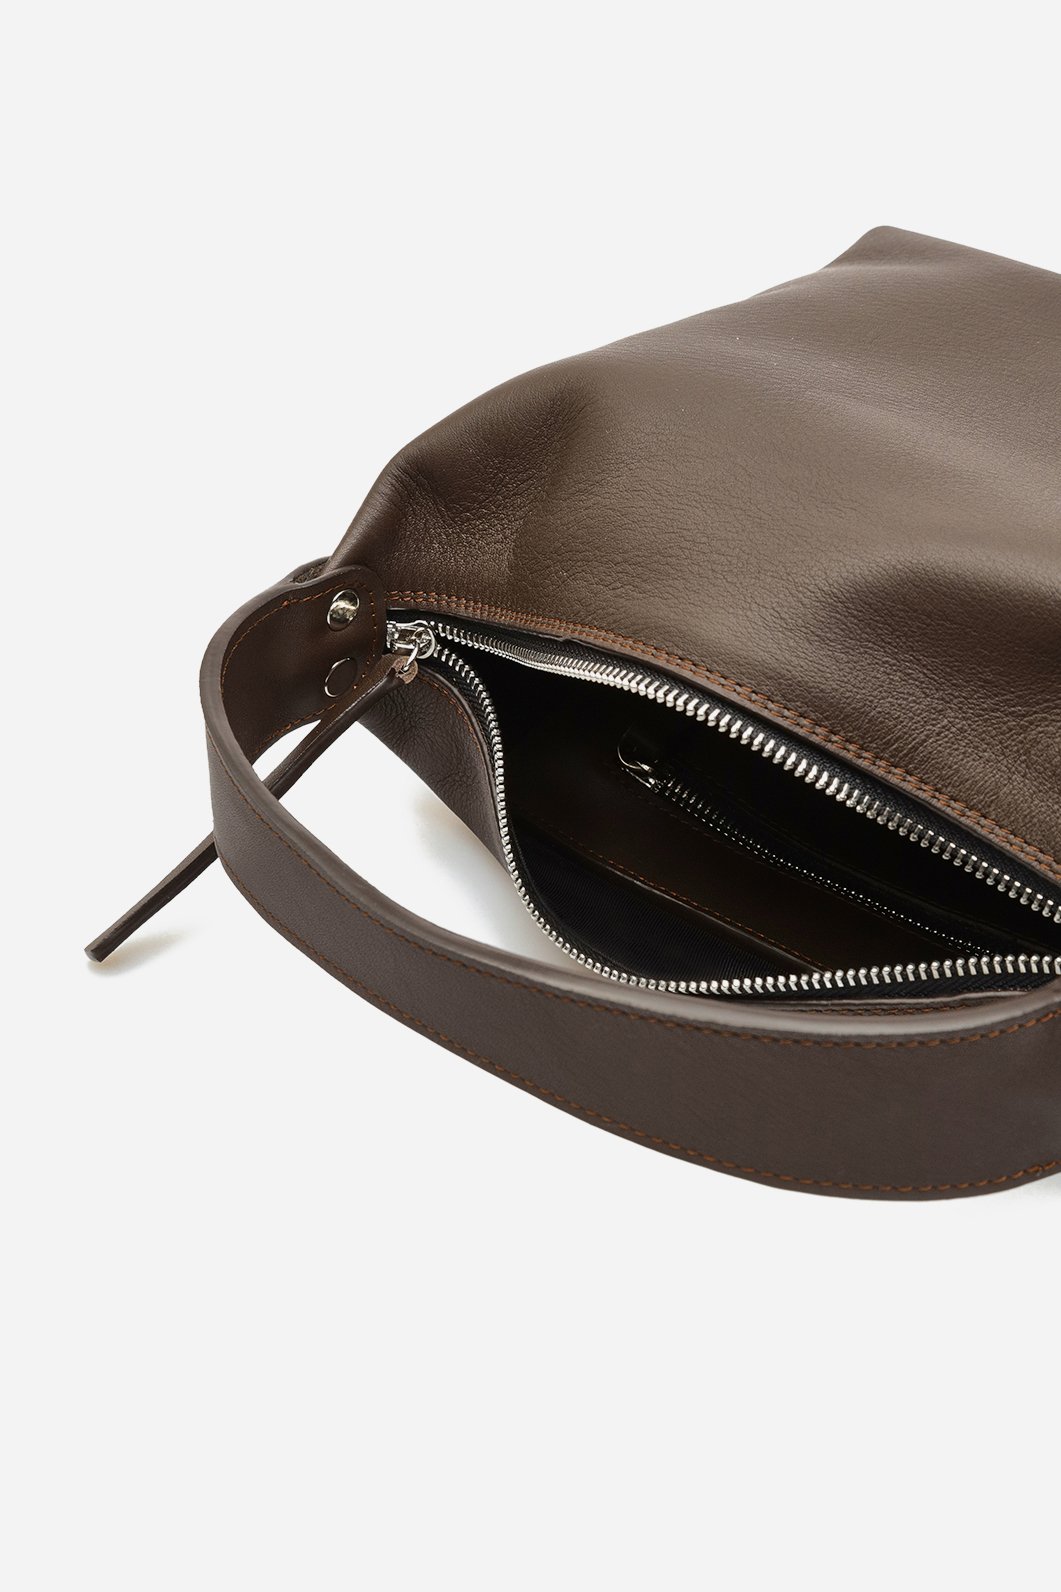 Selma mini brown textured leather
shoulder bag /silver/